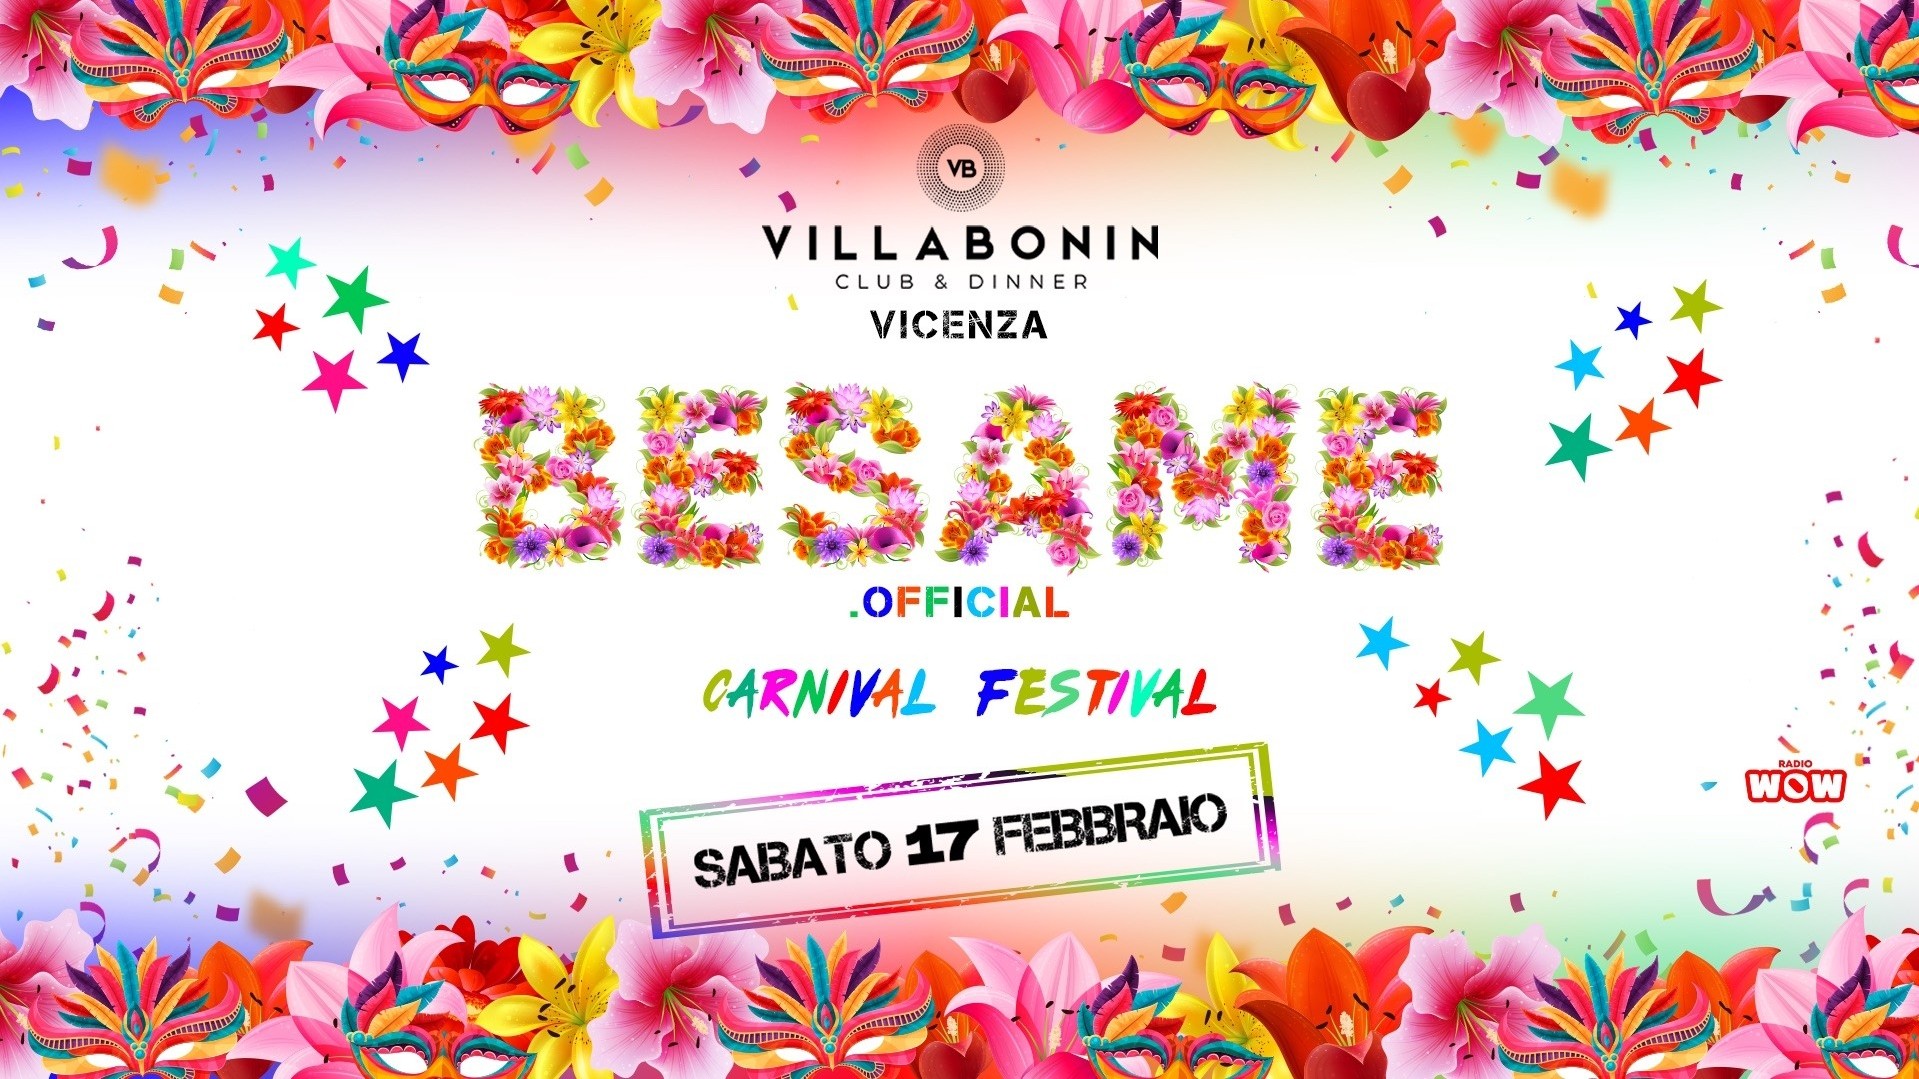 Besame - Carnival Festival